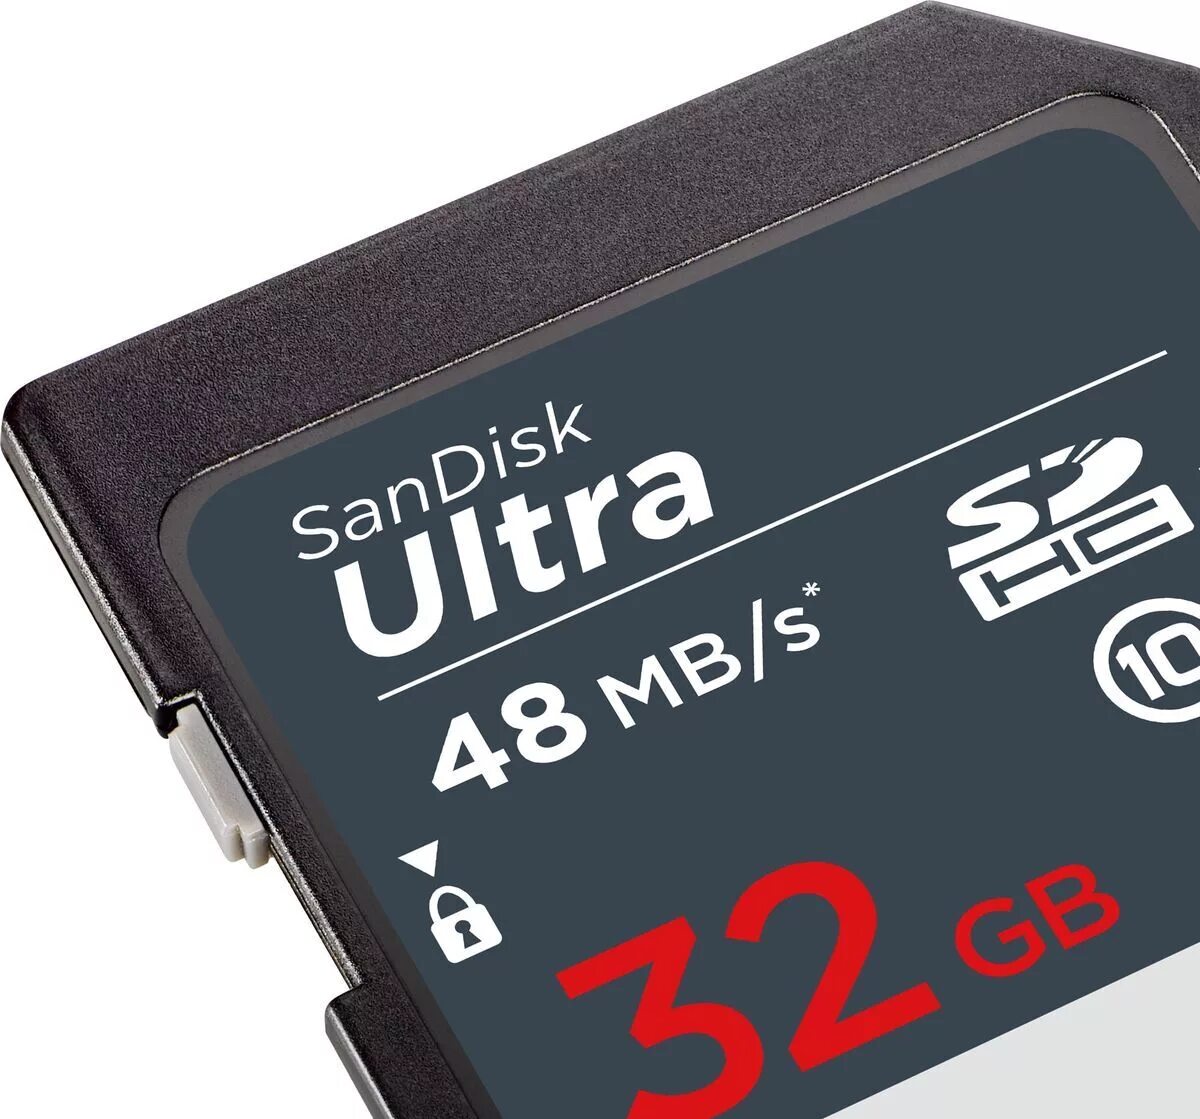 Uhs 3 память. SANDISK Ultra 32 GB SDHC. SANDISK 32gb SD SANDISK Ultra ( ). SANDISK UHS 3. Карта памяти 32gb SANDISK Ultra SDHC.